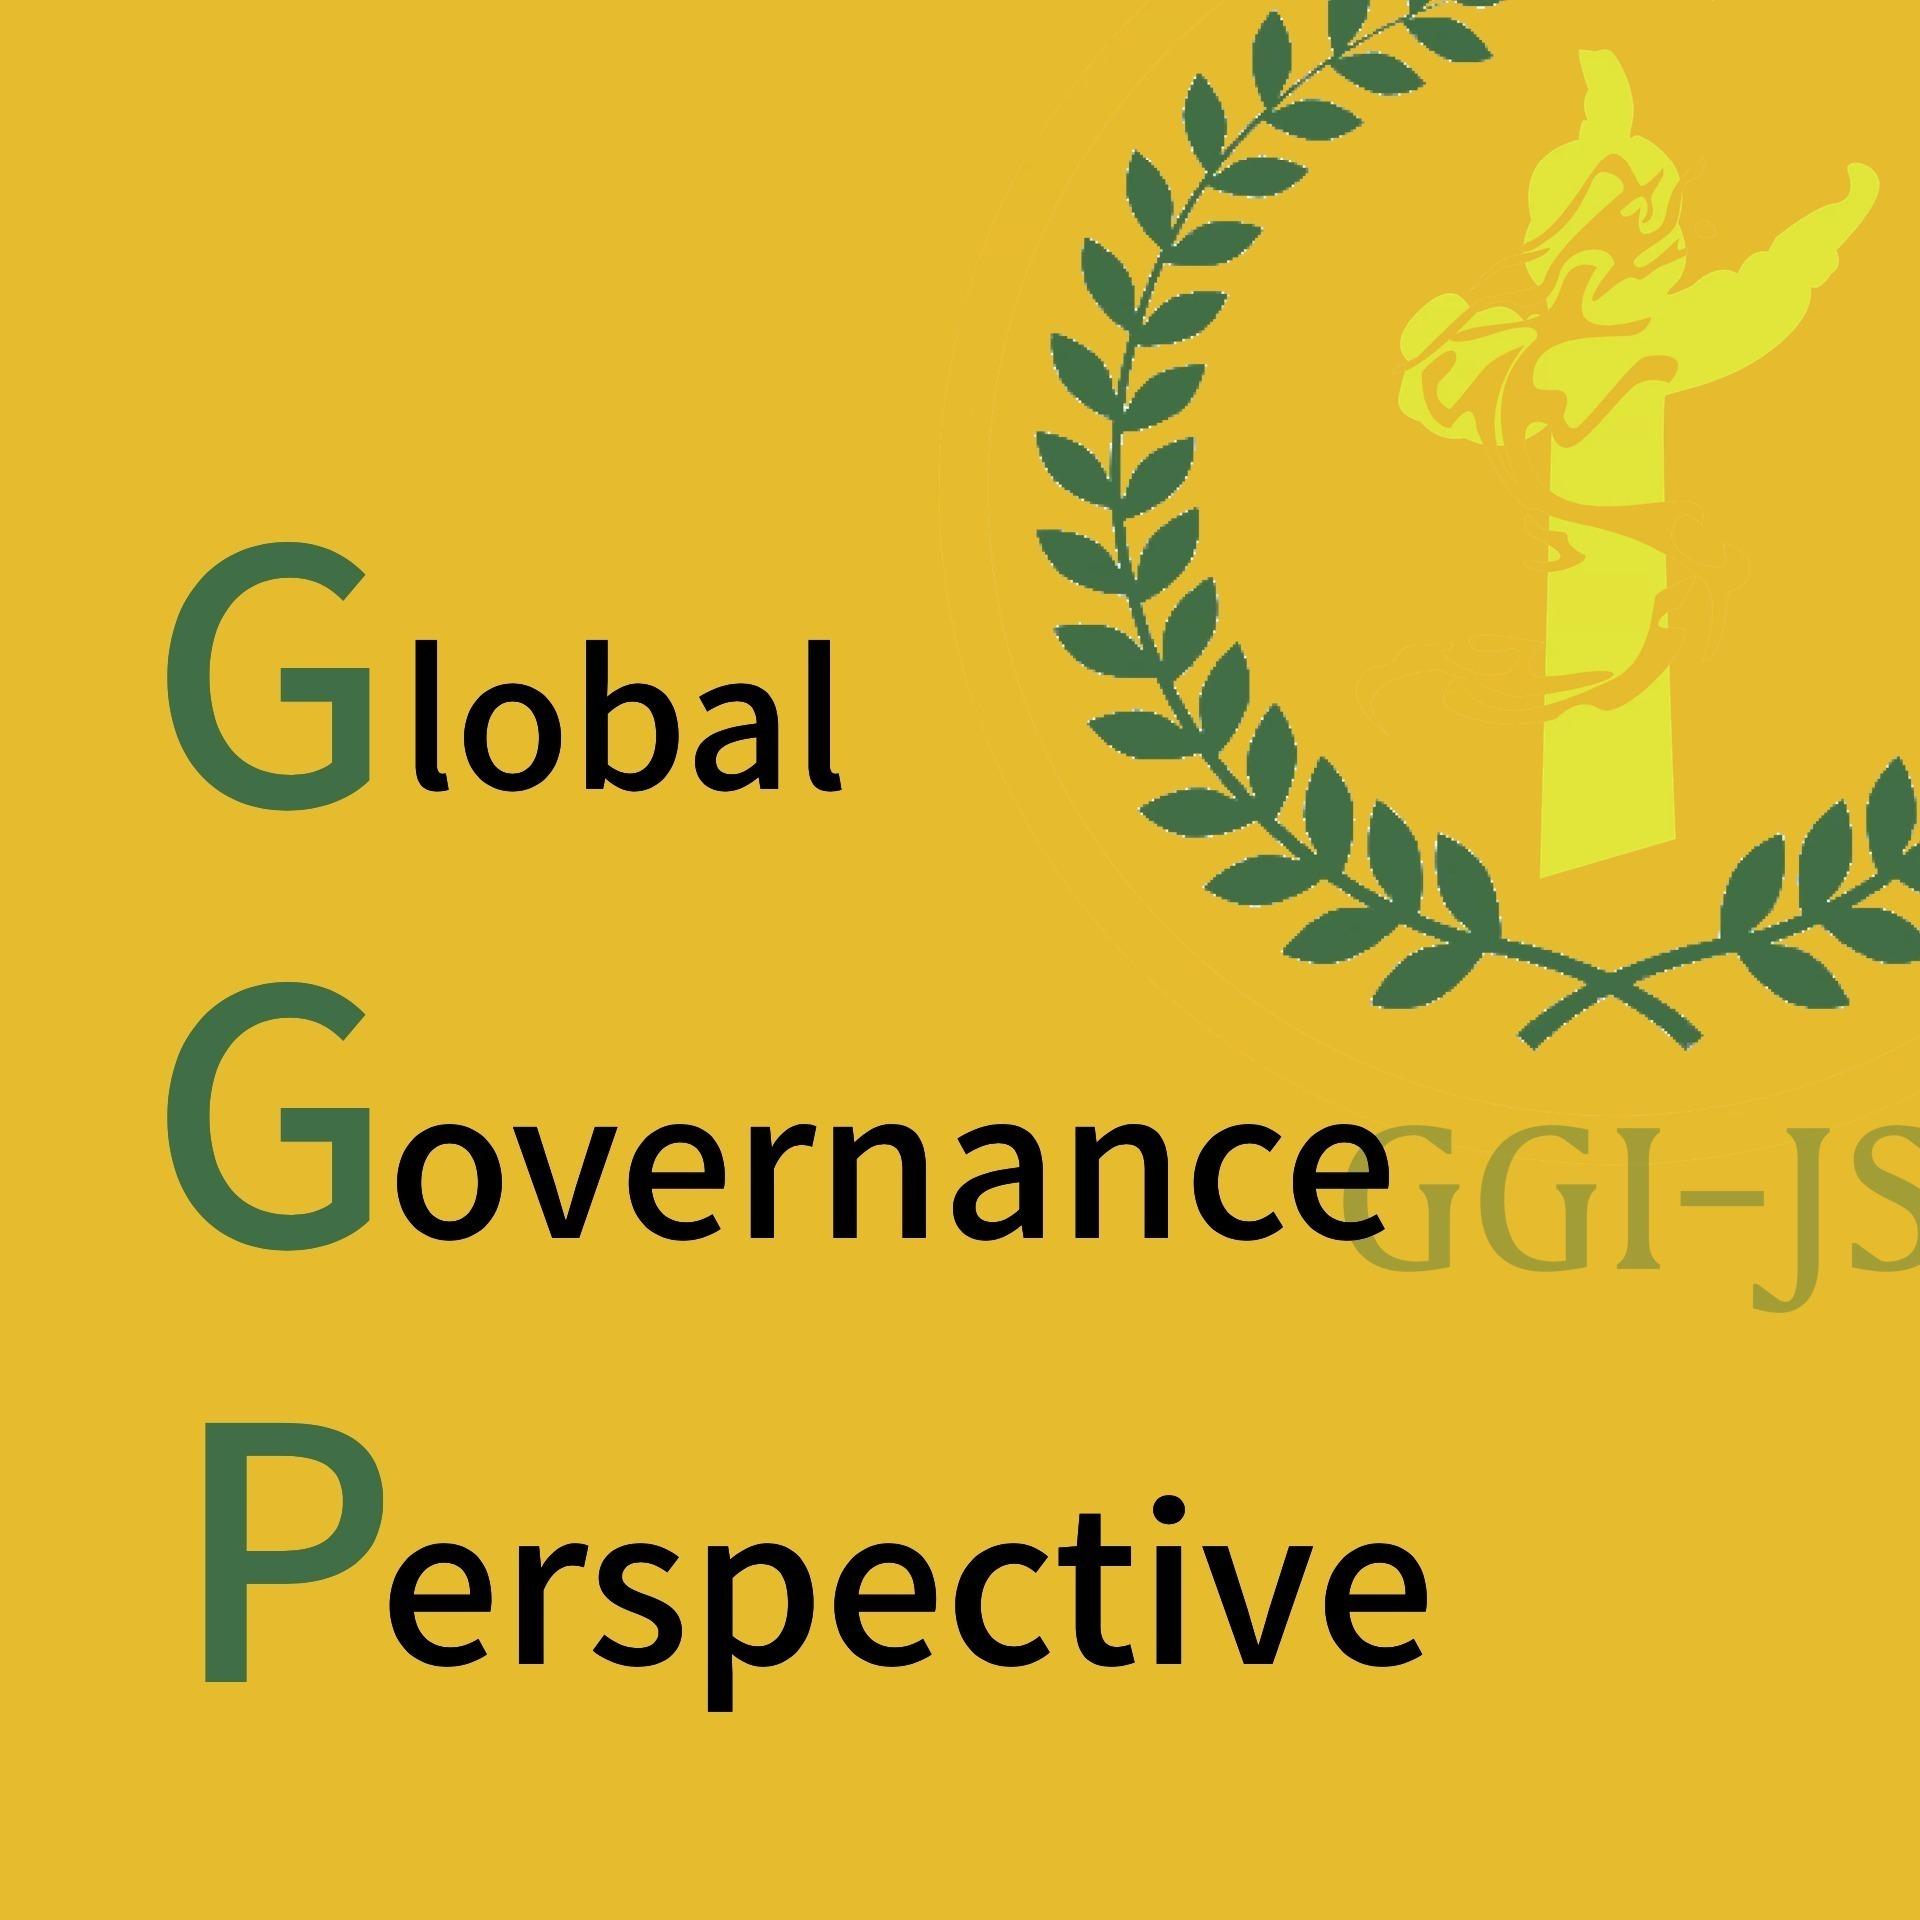 Global Governance Perspective